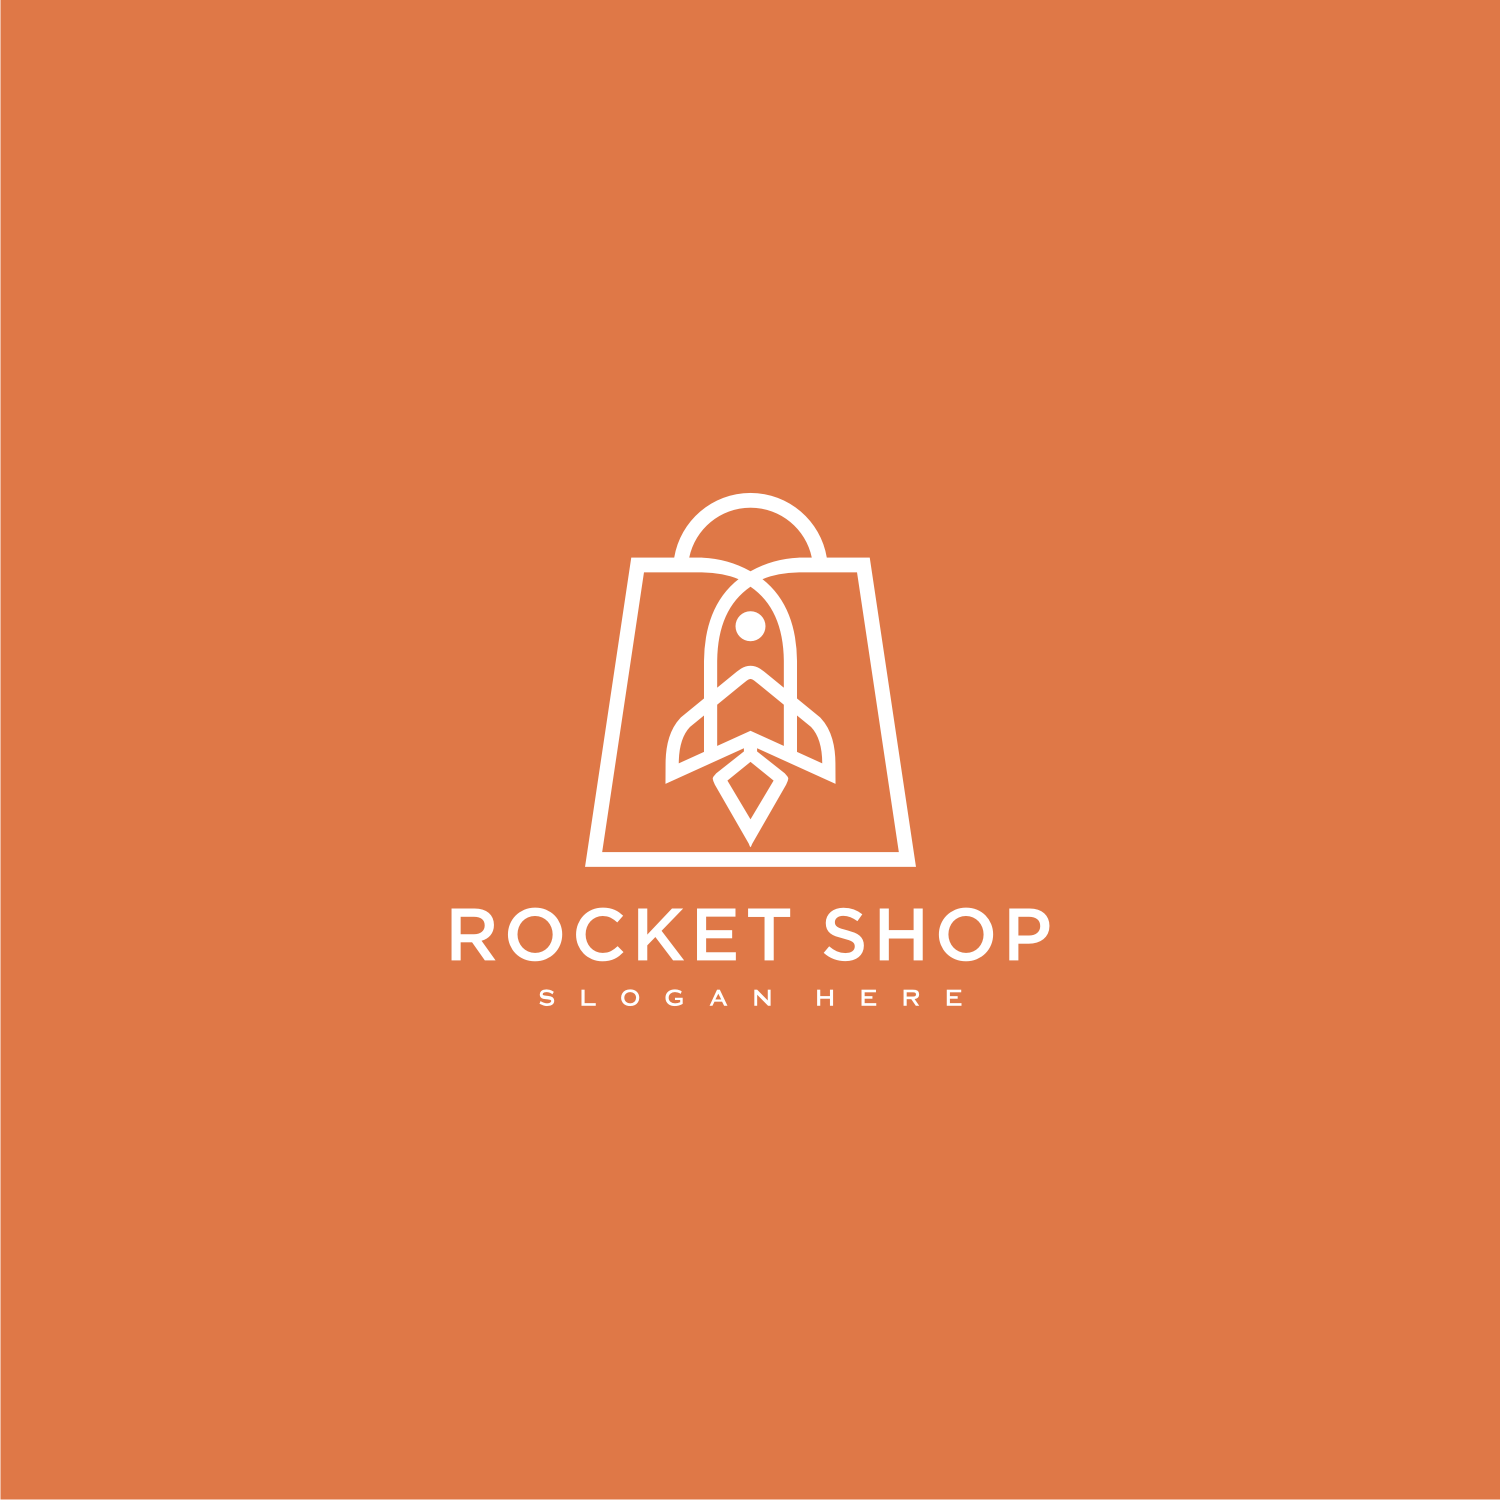 Rocket Shop Logo Design Vector